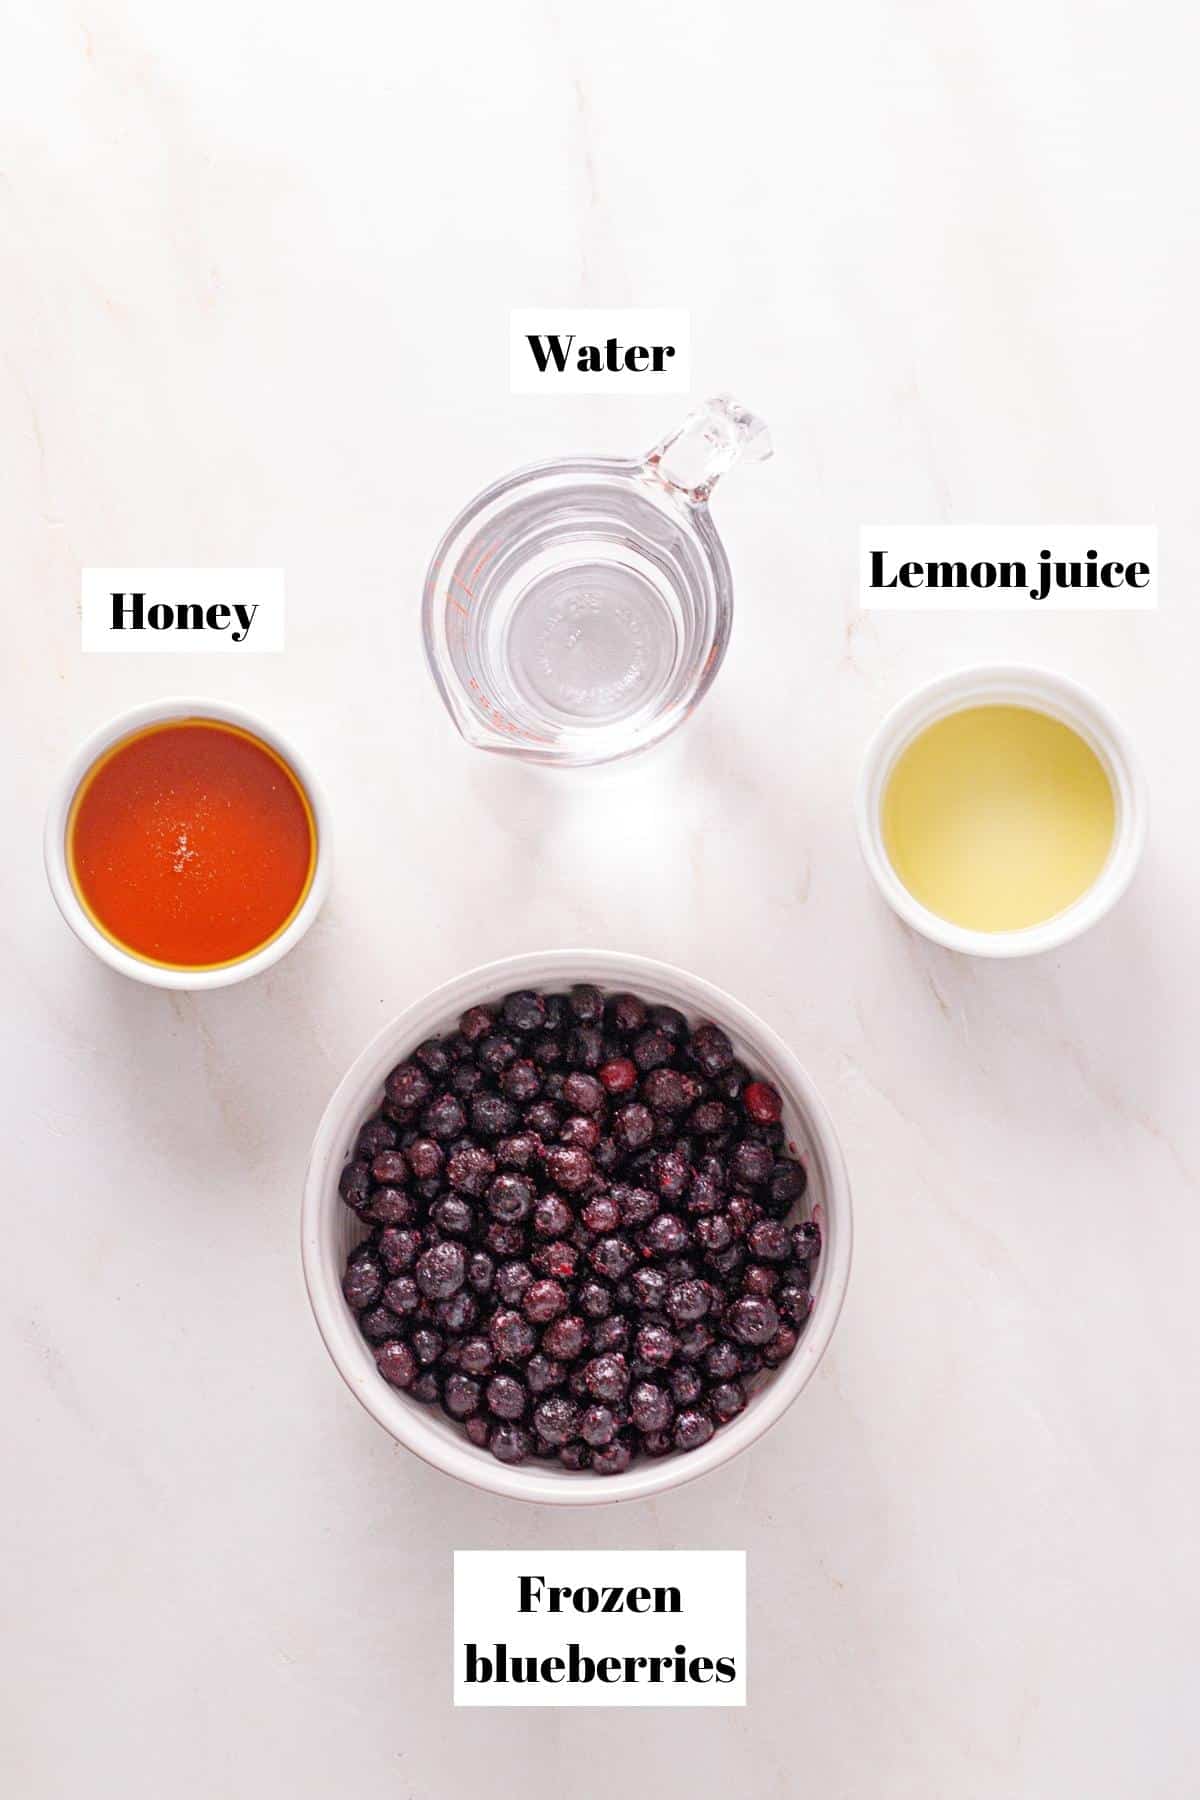 Blueberry juice recipe ingredients.